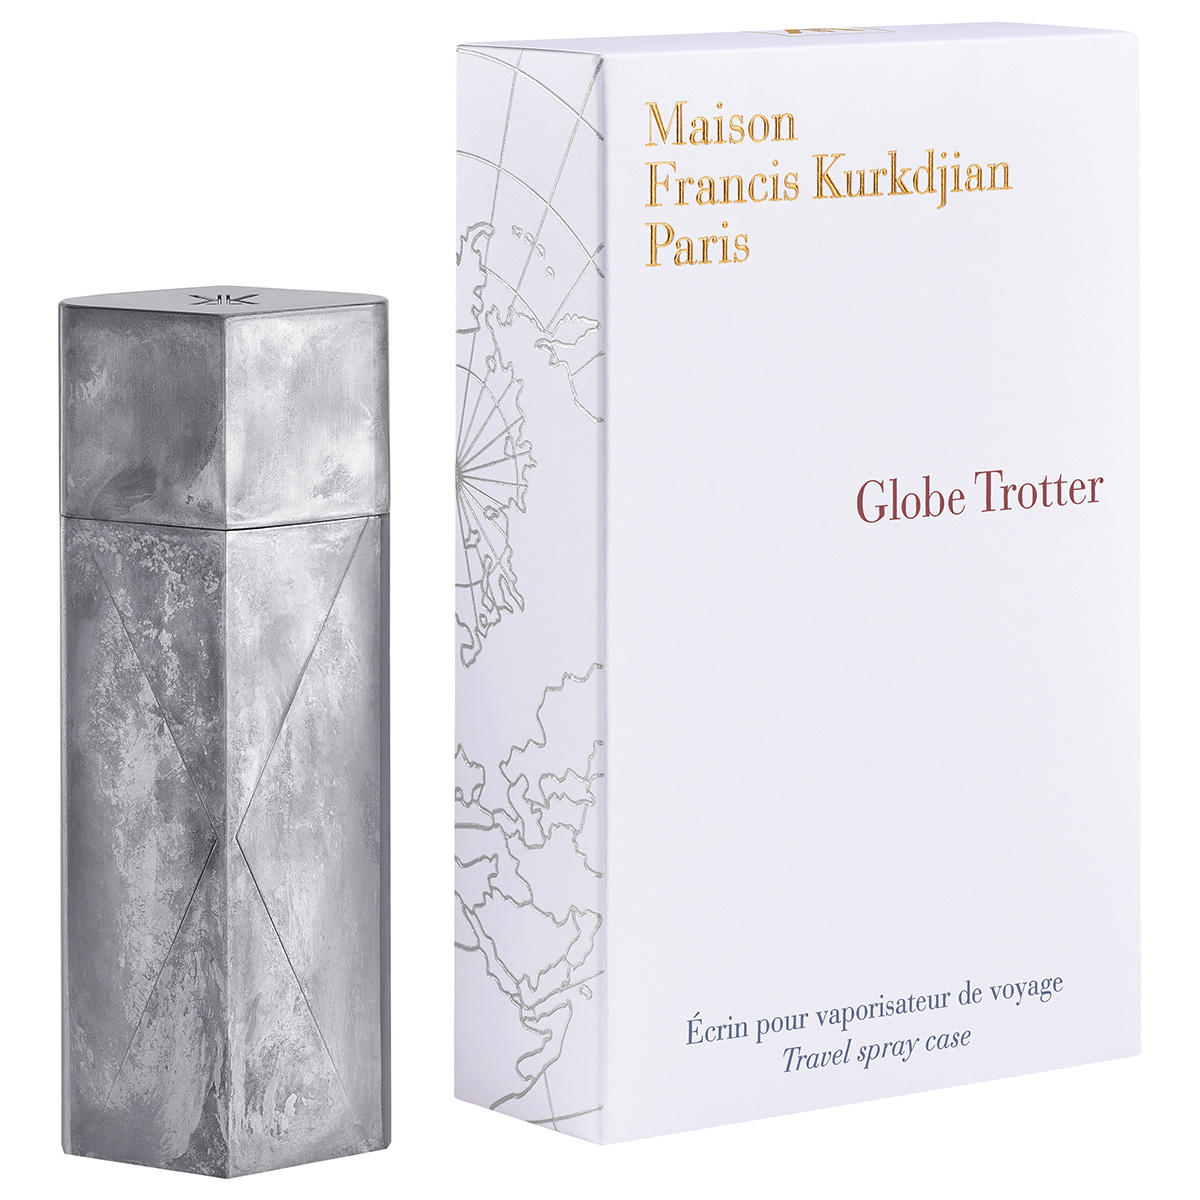 Maison Francis Kurkdjian Paris Globe Trotter Travel Case Zinc Edition